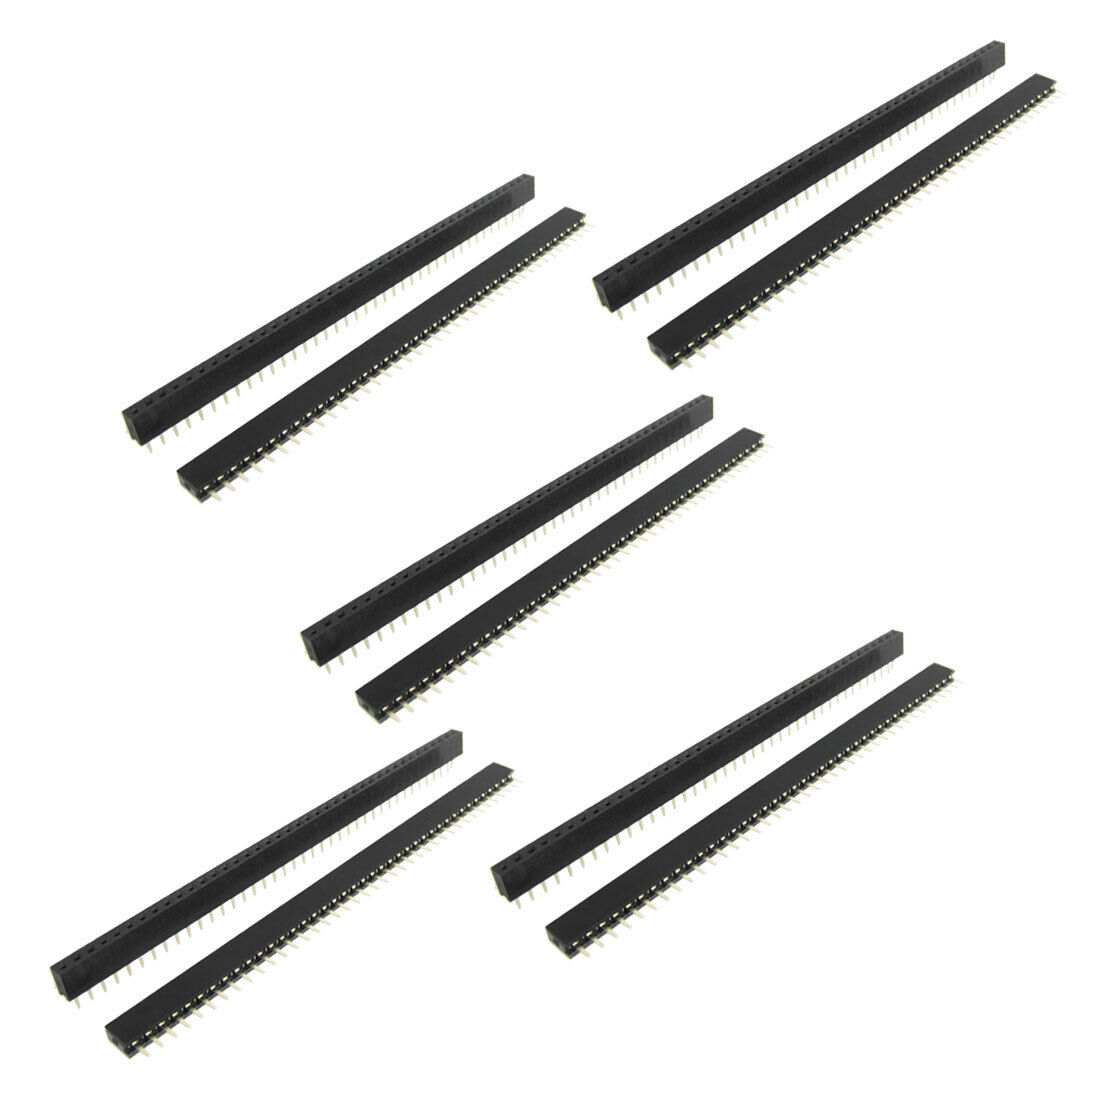 10 Pcs 1x40 Pin 2.54mm Pitch Single Row Straight Female Pin Headers Strip